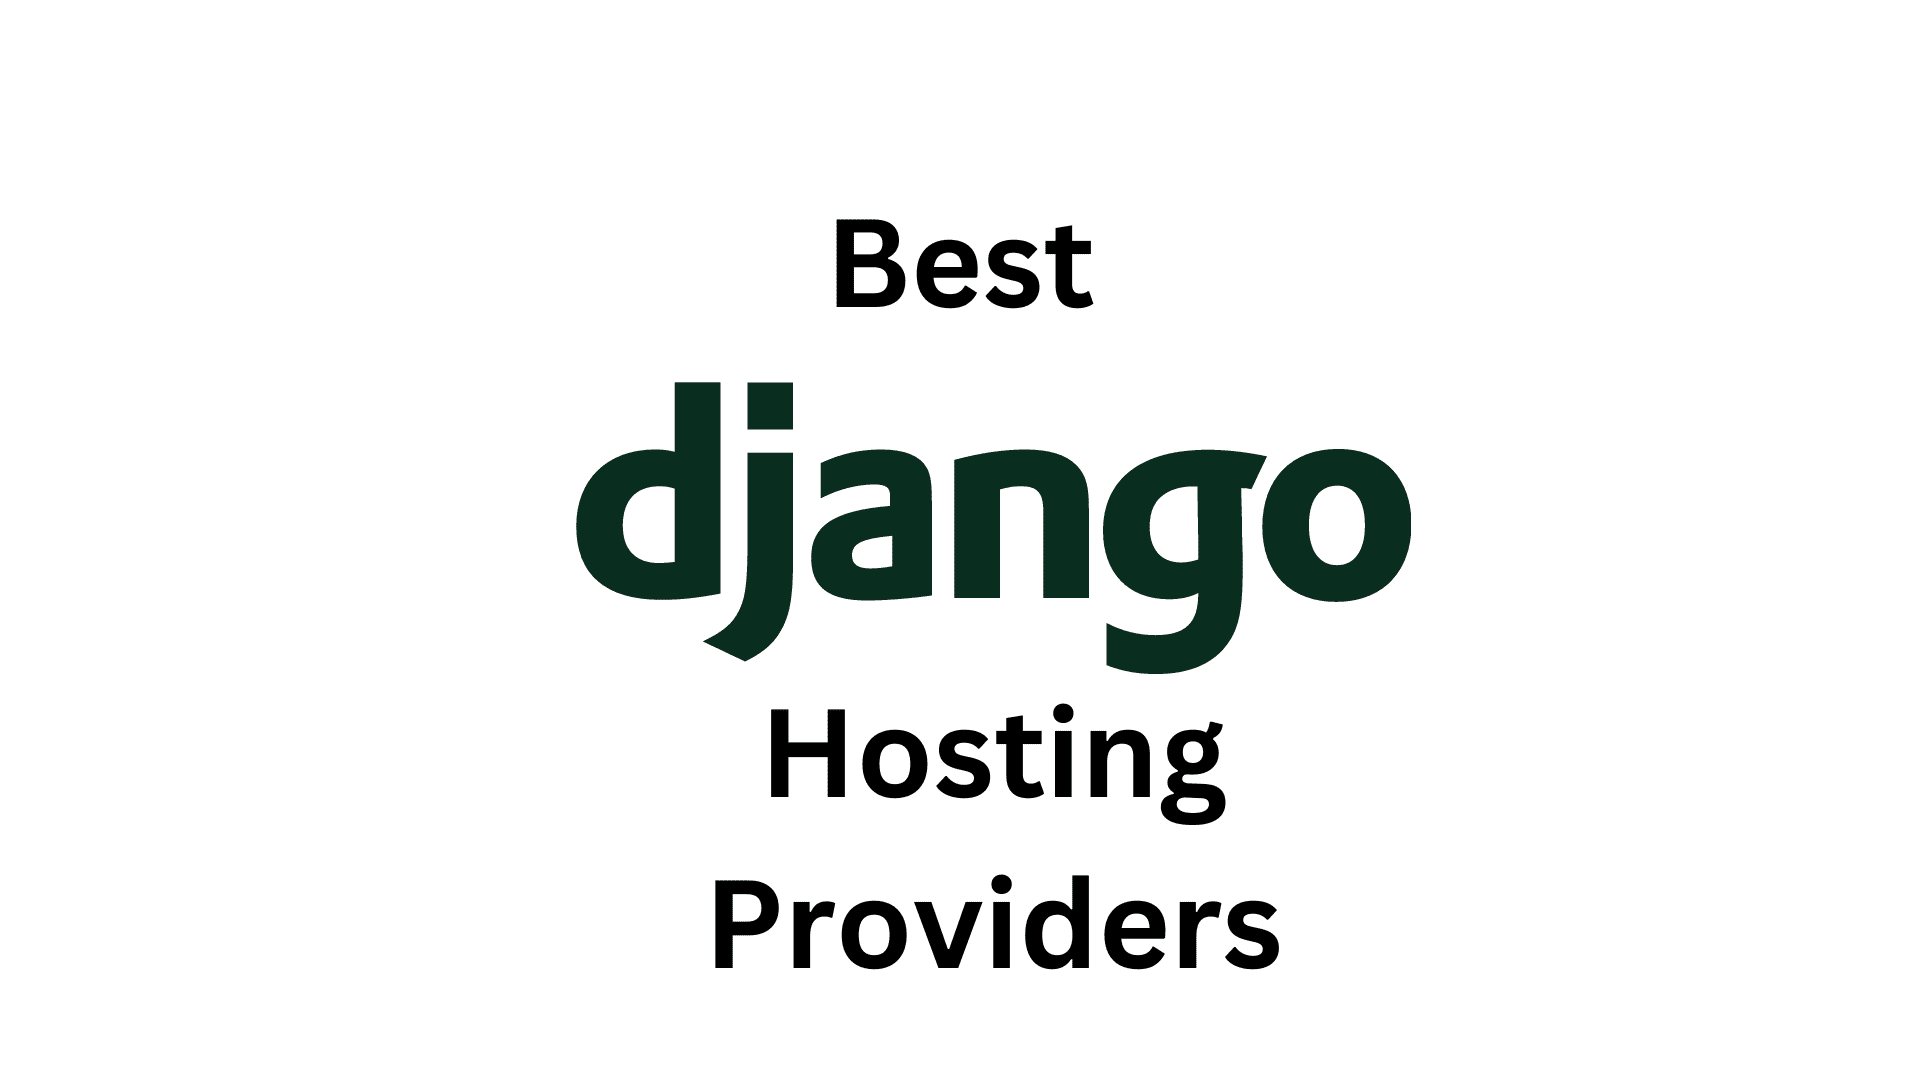 Best django hosting providers